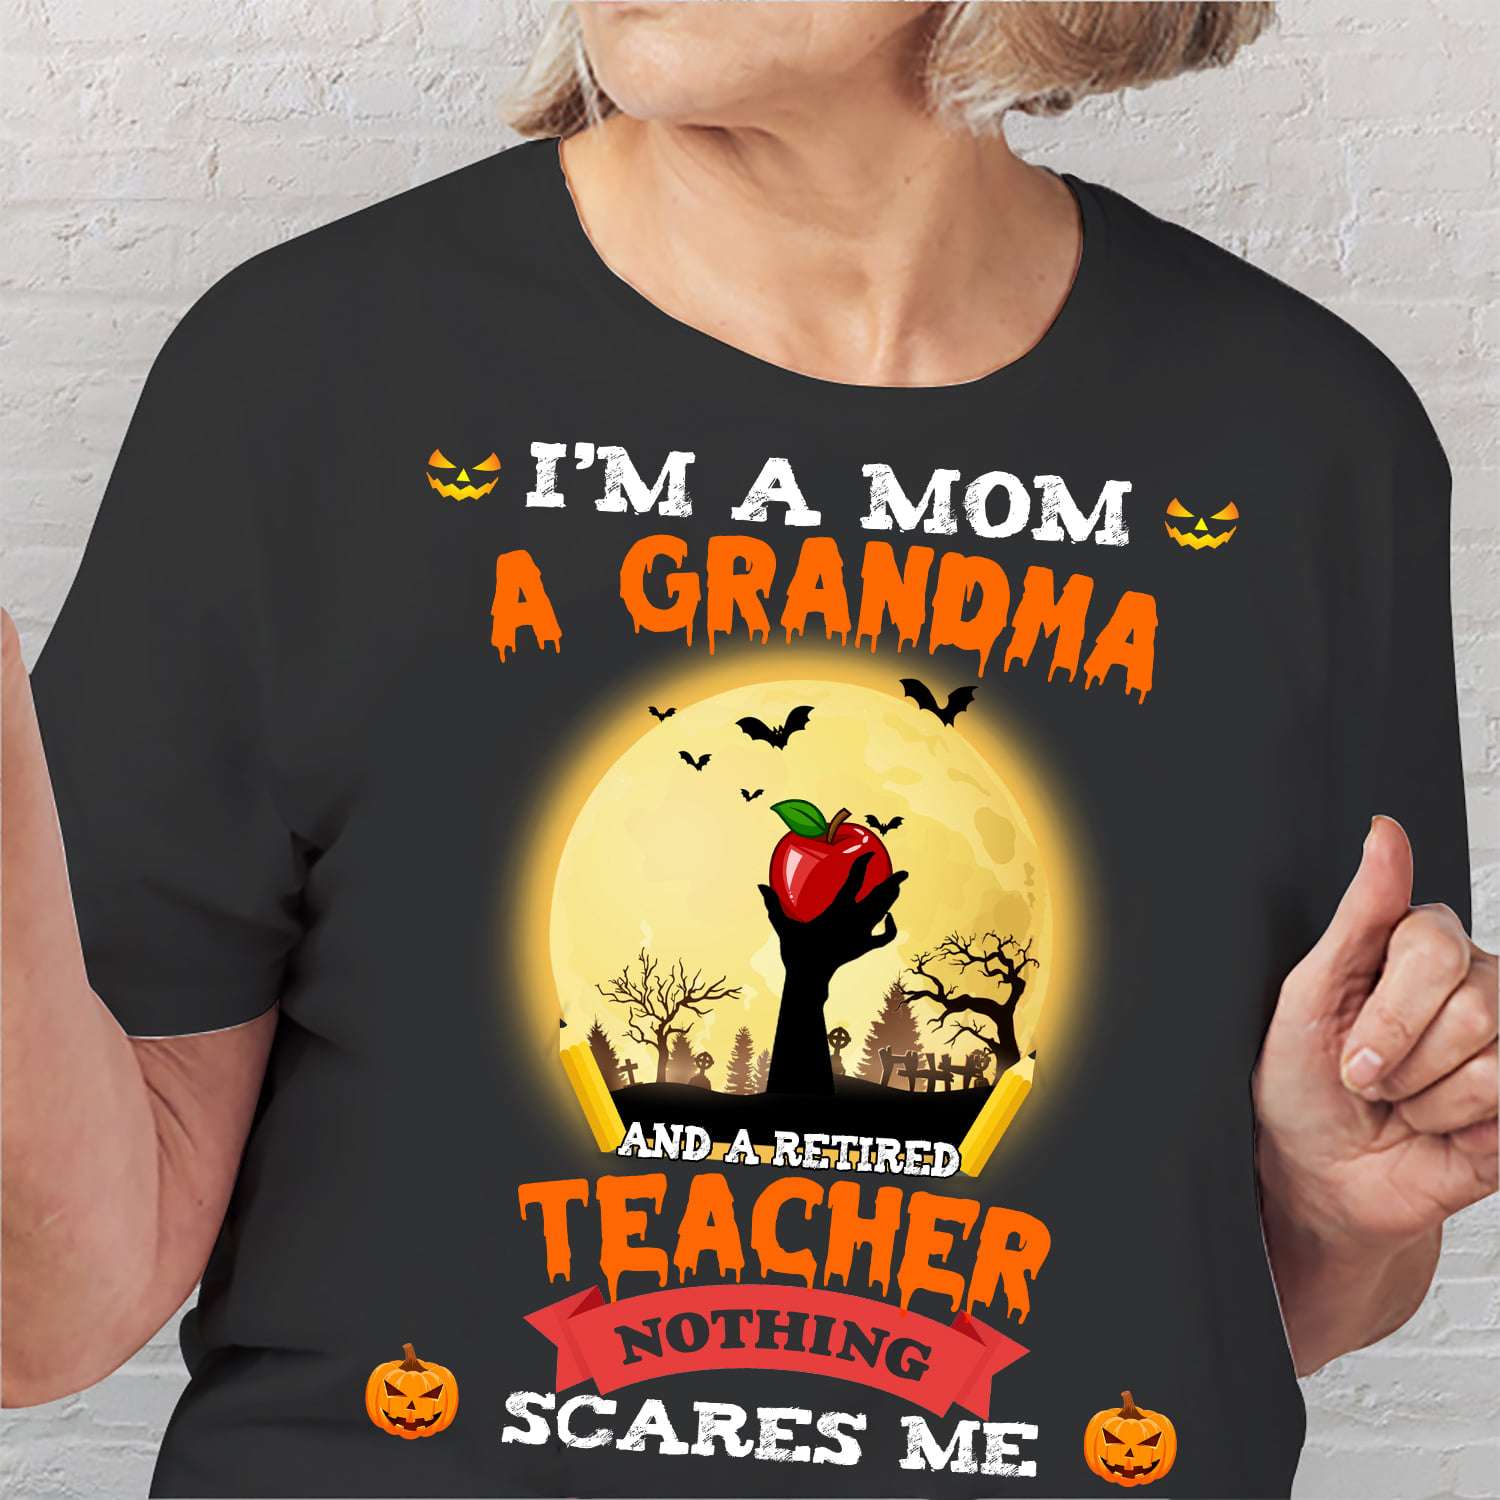 I'm a mom a grandma and a retired teacher nothing scares me - Grandma retired teacher, teacher the job